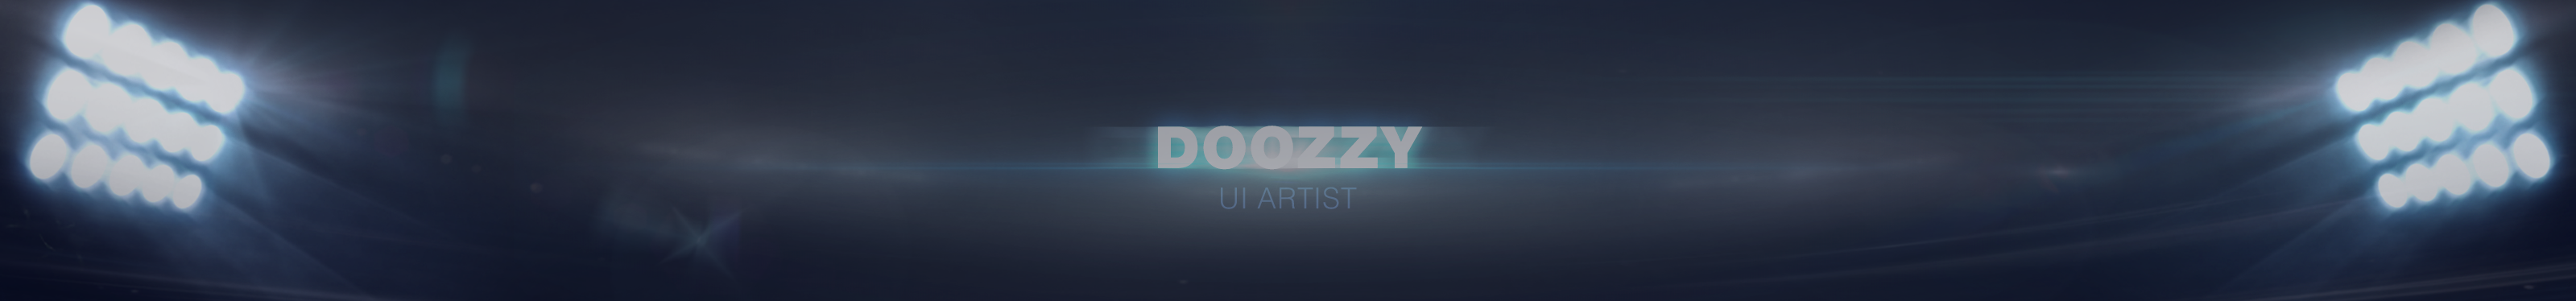 Doozzy Park のプロファイルバナー